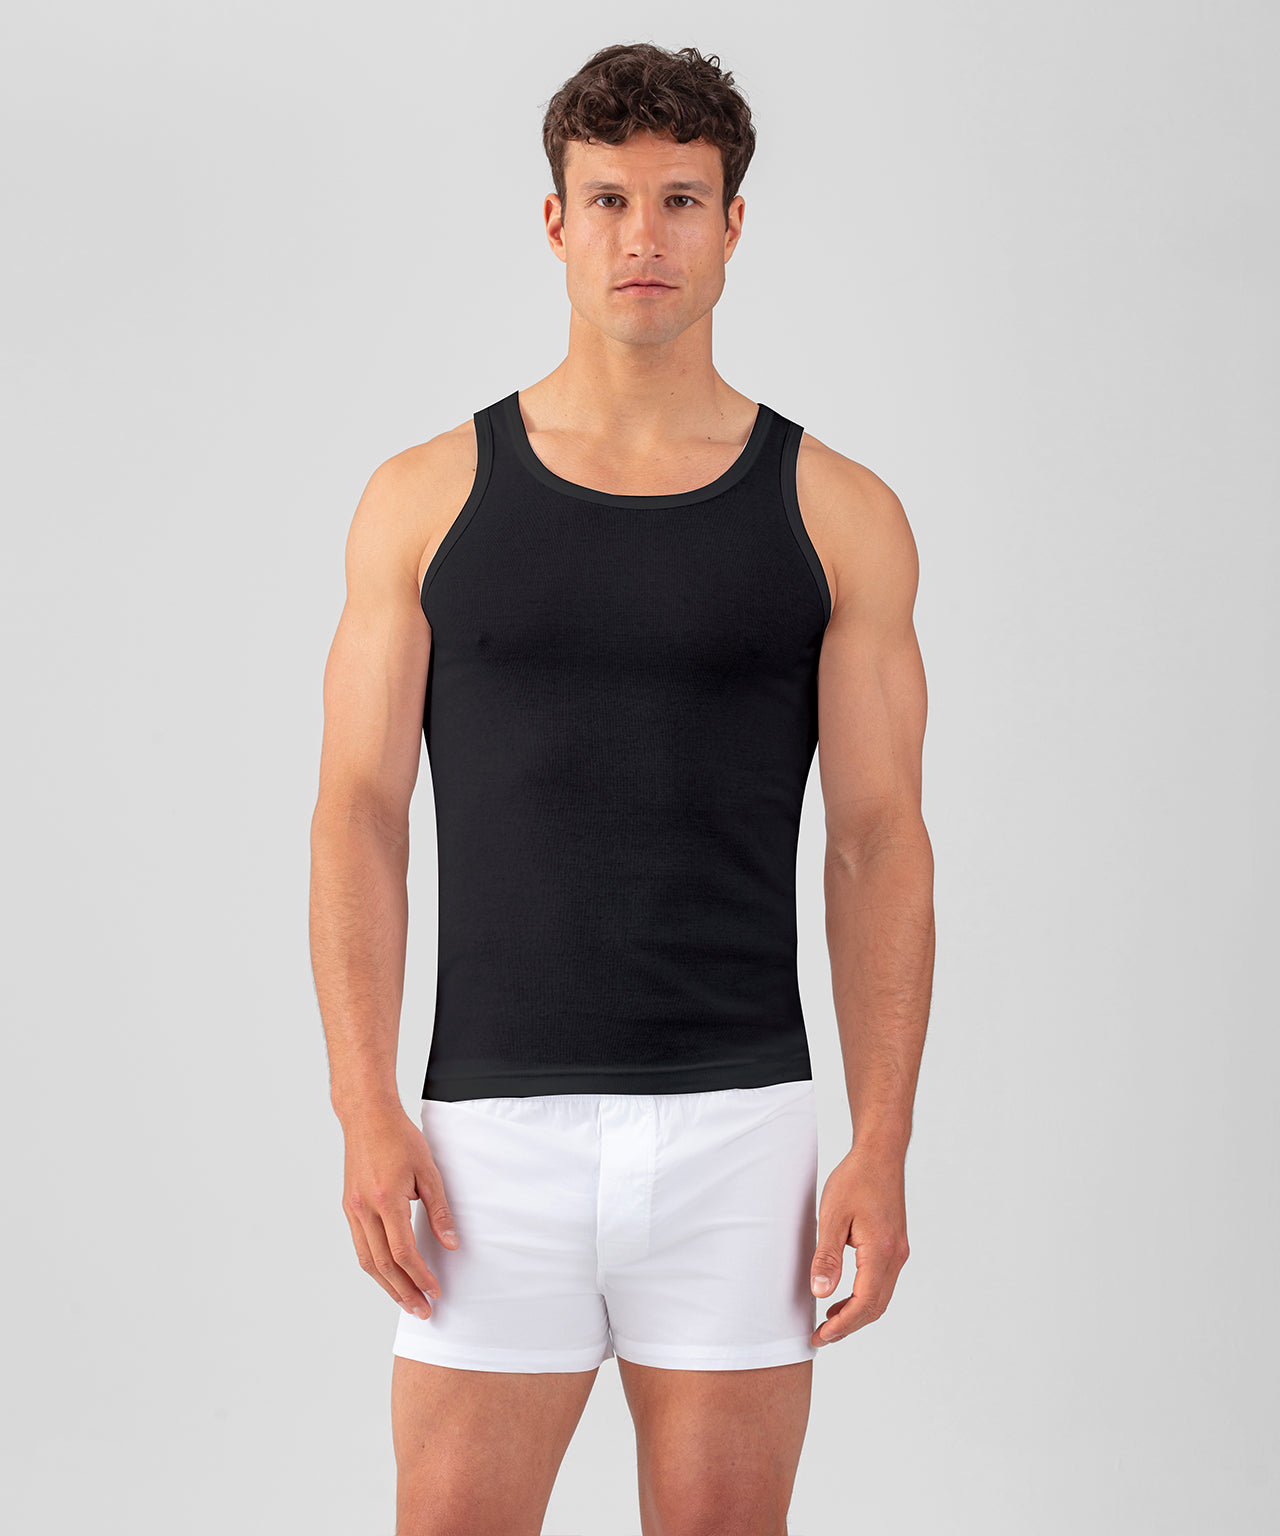 6 Men A-Shirt Ribbed Muscle Tank Top Undershirt White Ribbed Sleeveless Tee  XL